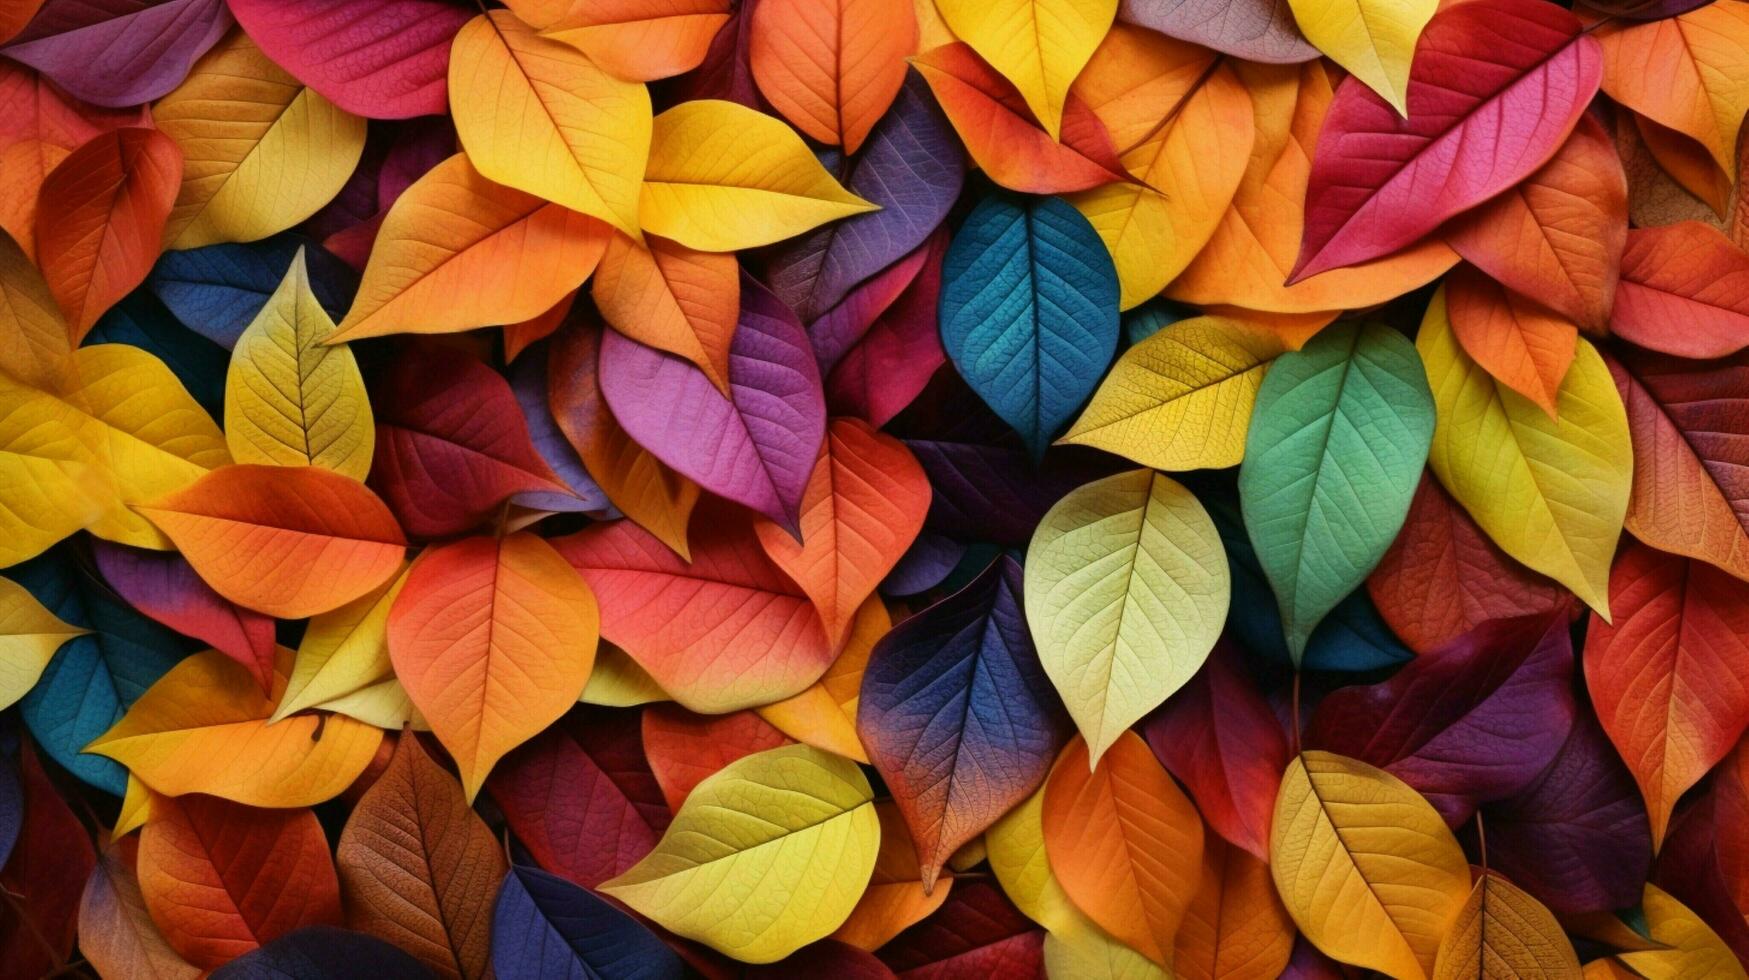 vibrant autumn leaves backdrop nature beautiful creativity photo